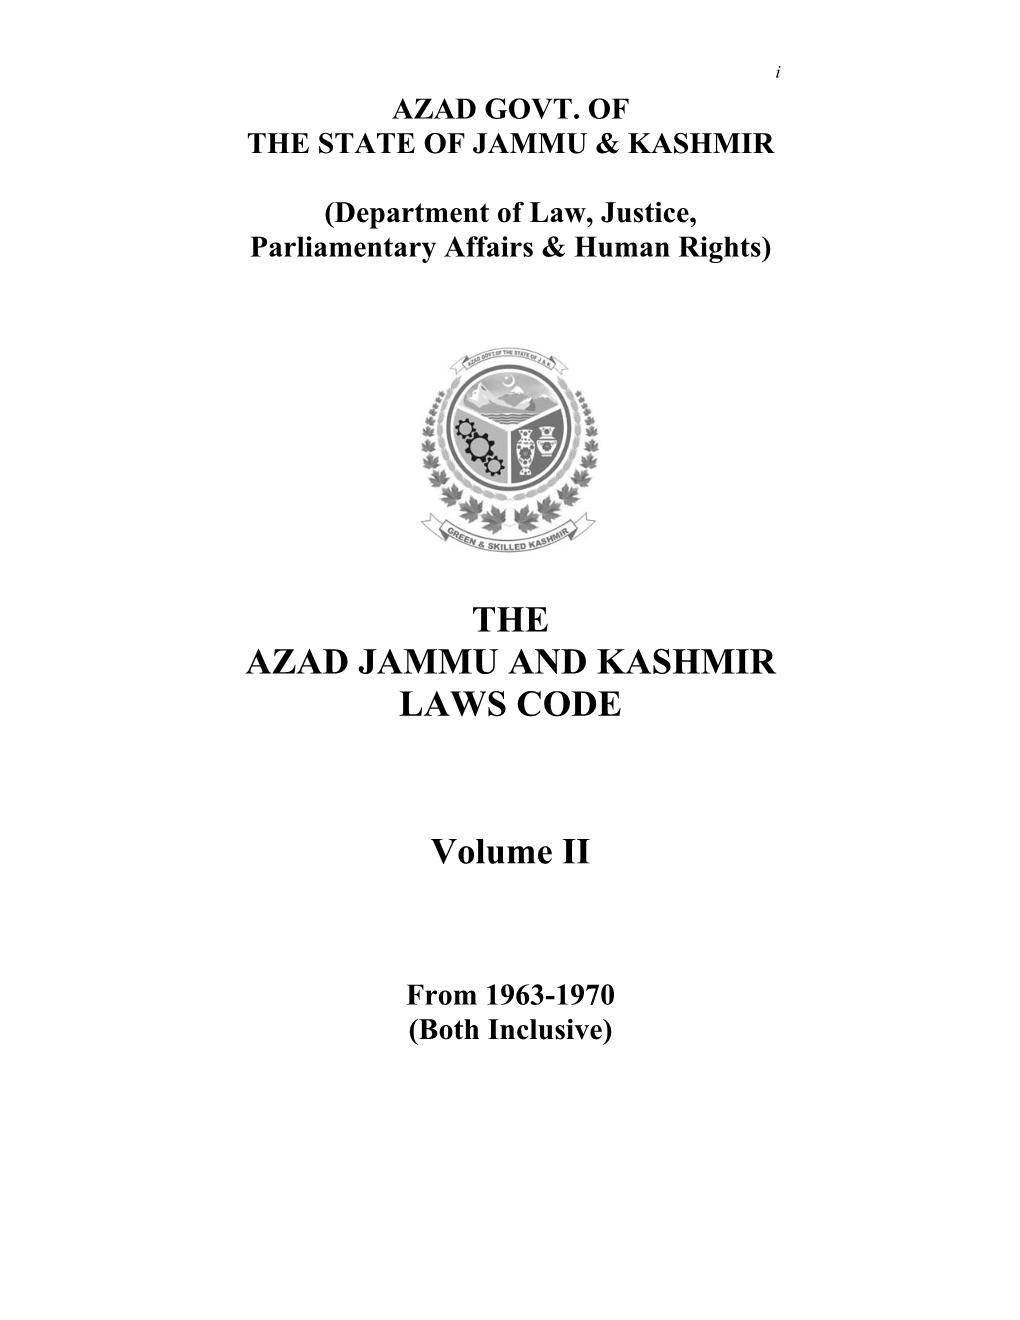 THE AZAD JAMMU and KASHMIR LAWS CODE Volume II